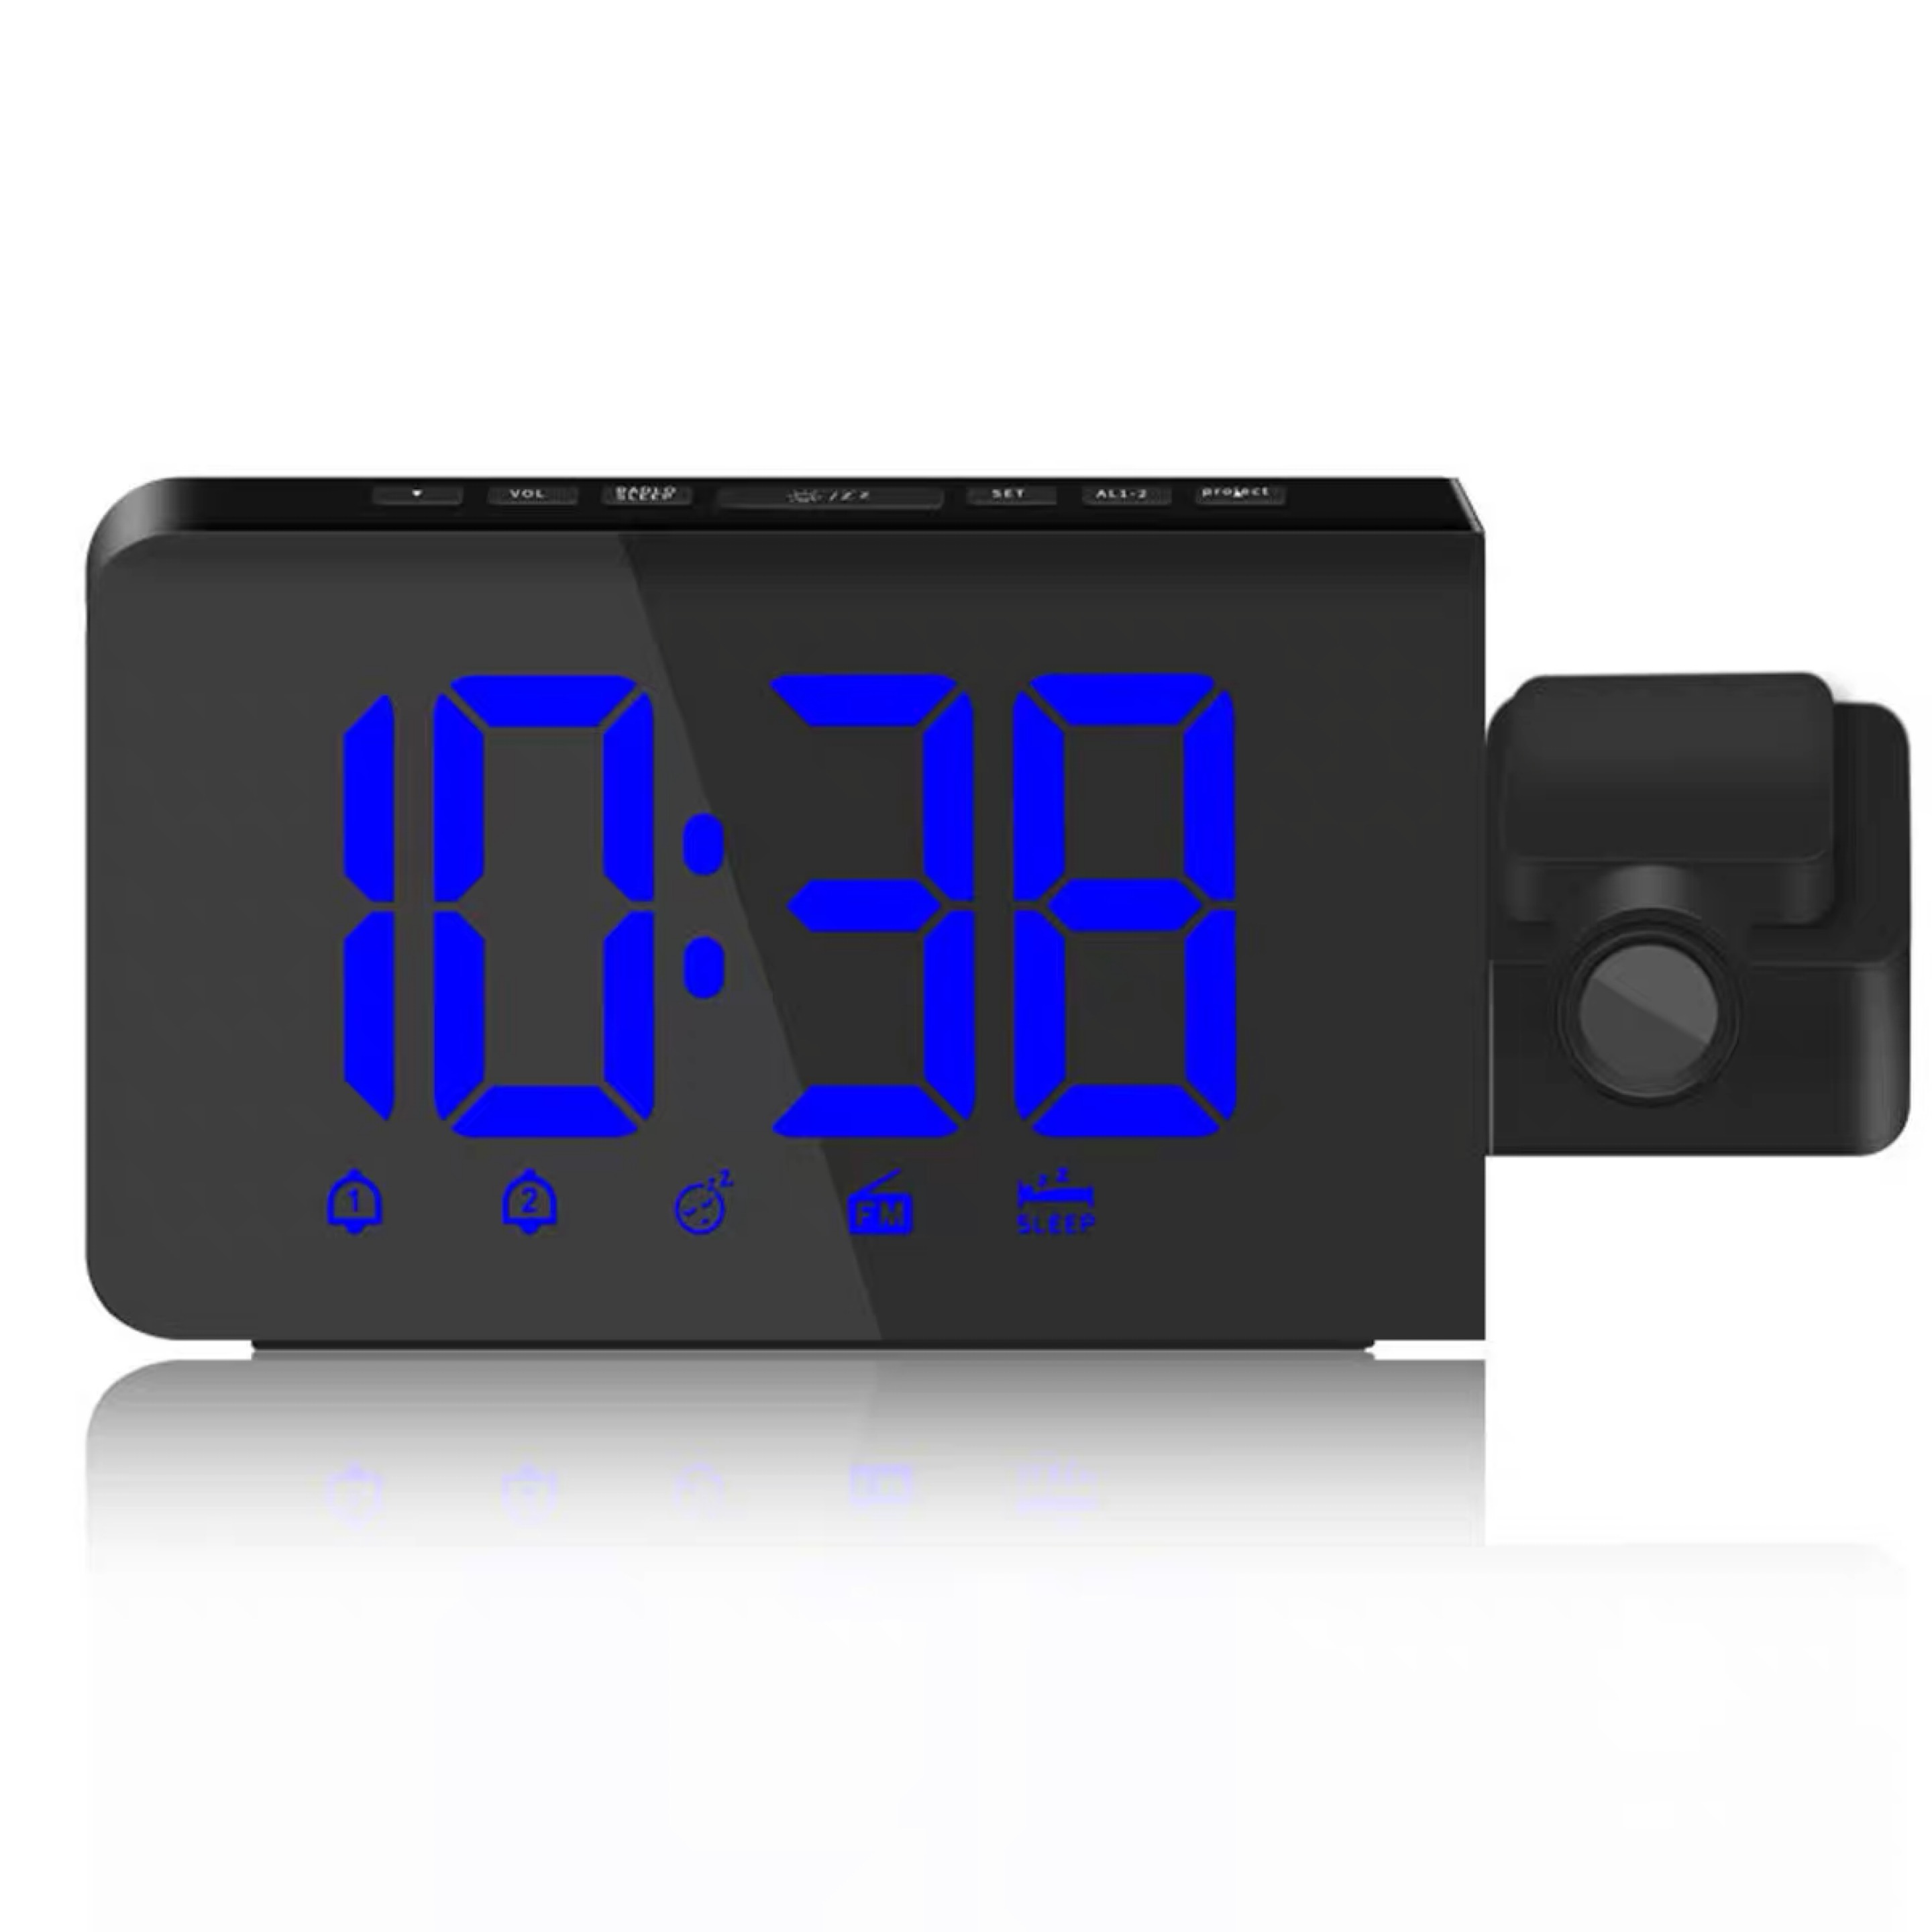 FM Projection clock